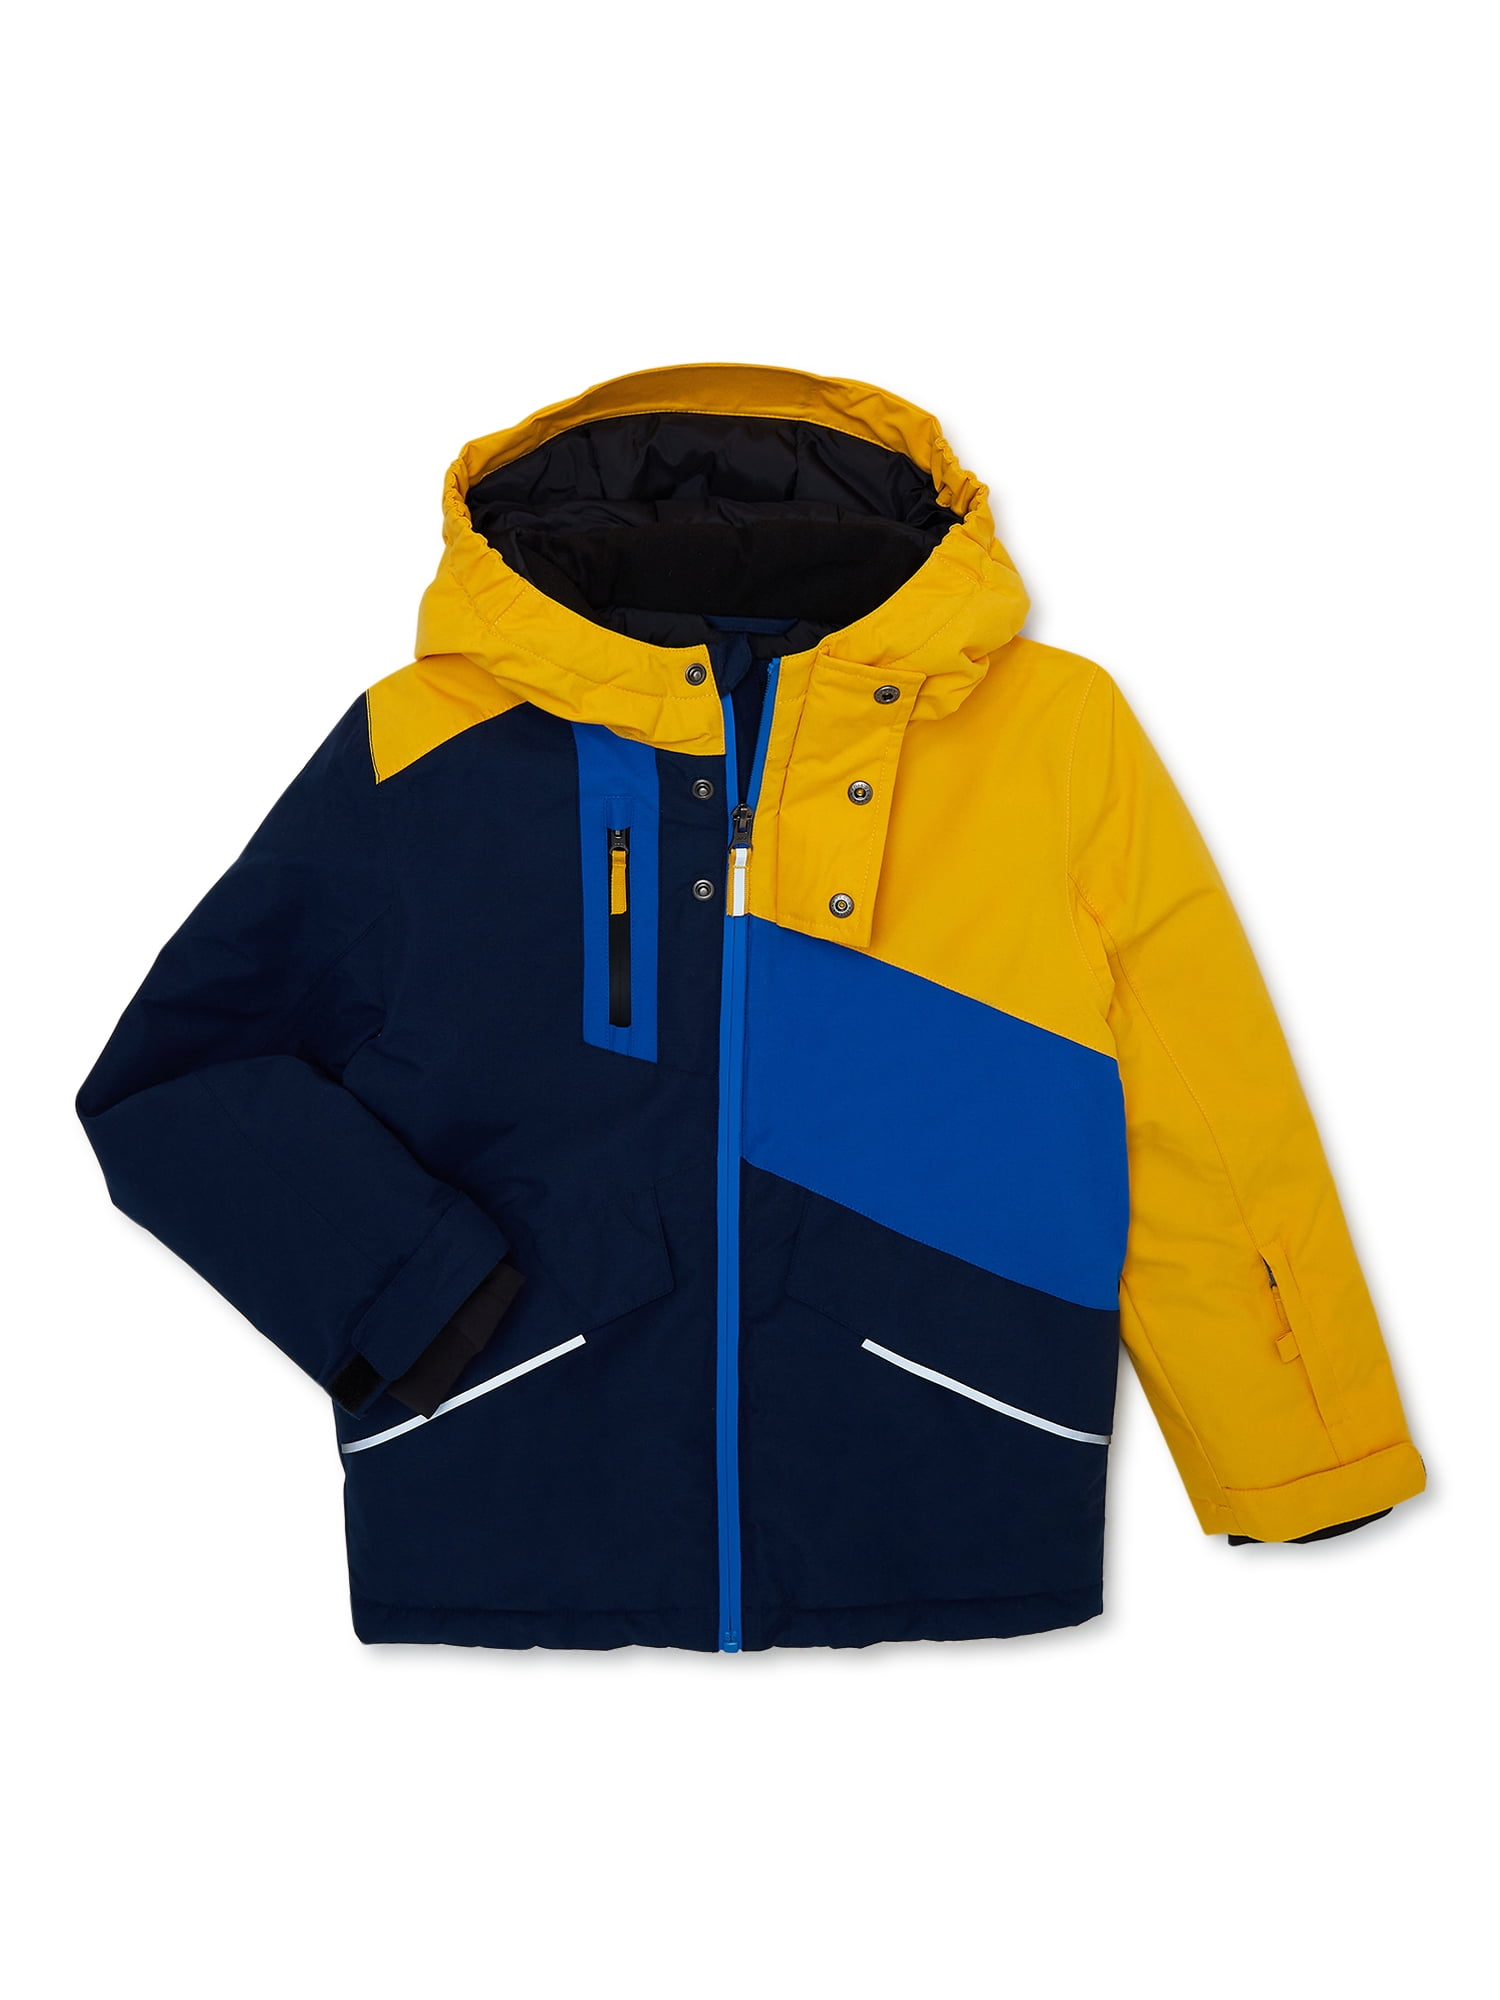 4-18 Jacket Tech Boys Waterproof Swiss Sizes with Ski Hood,